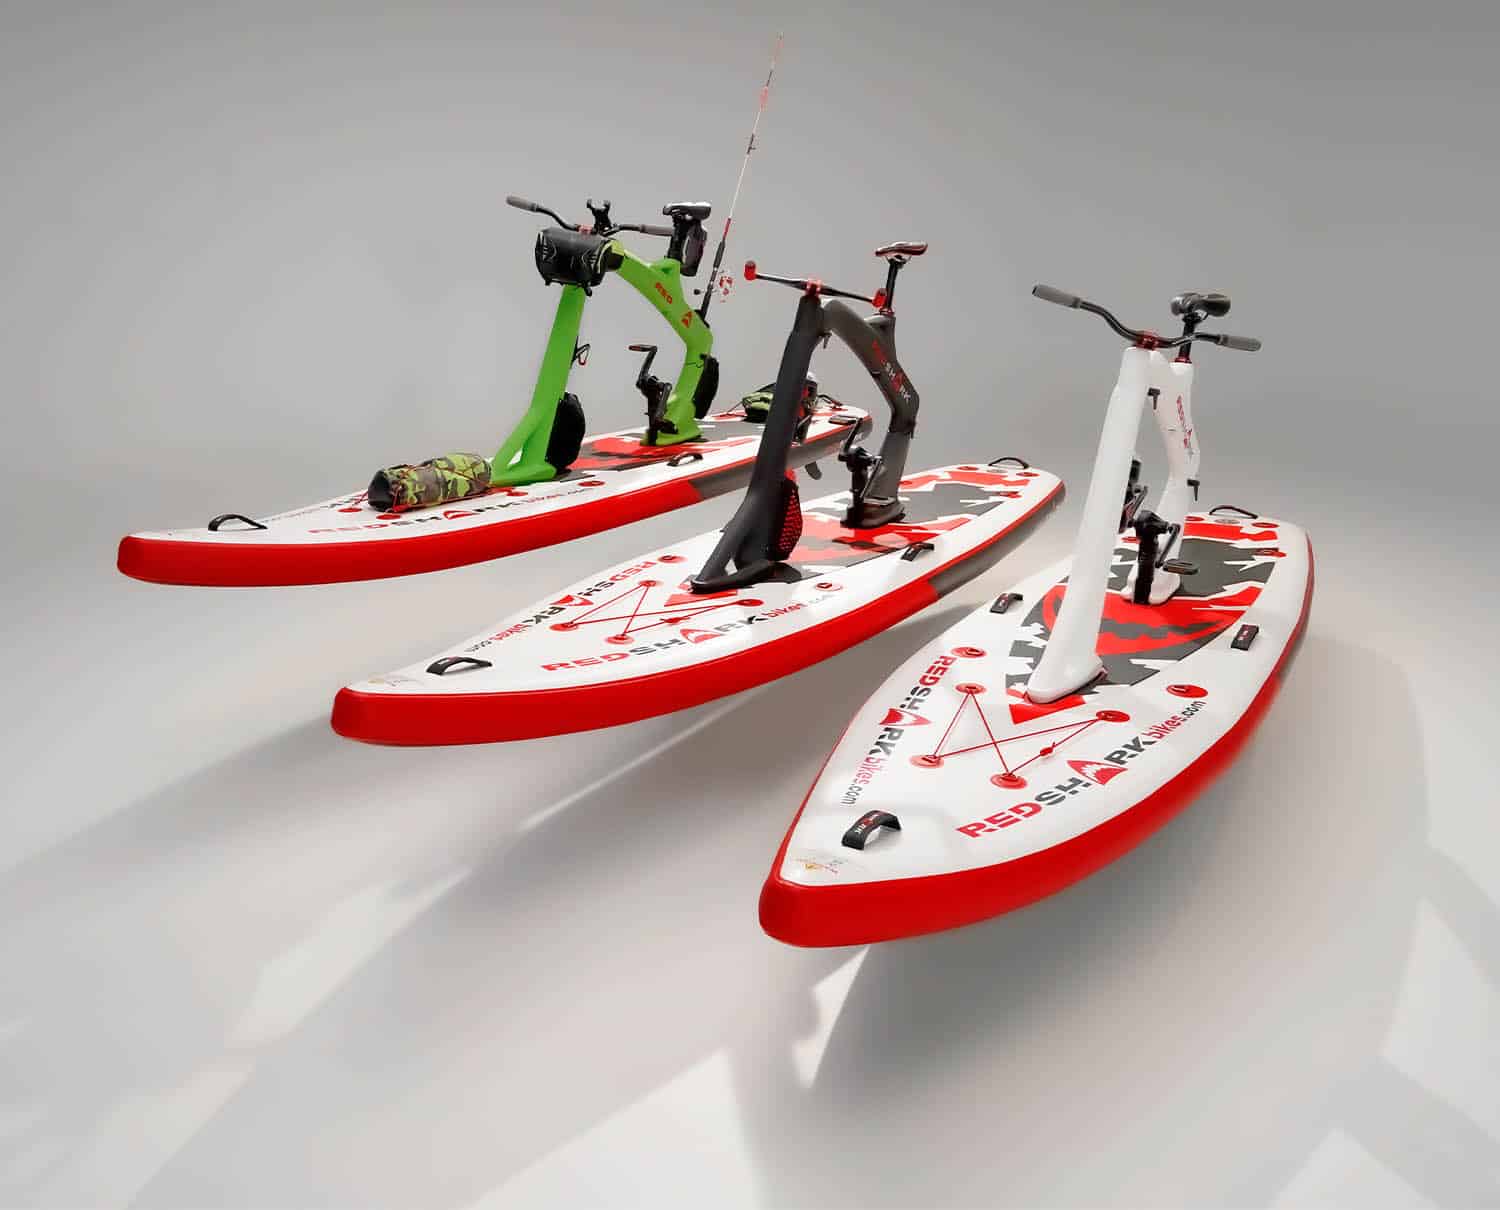 Red Shark Bikes Canada, kits, paddleboard, luxury, innovative, adventure